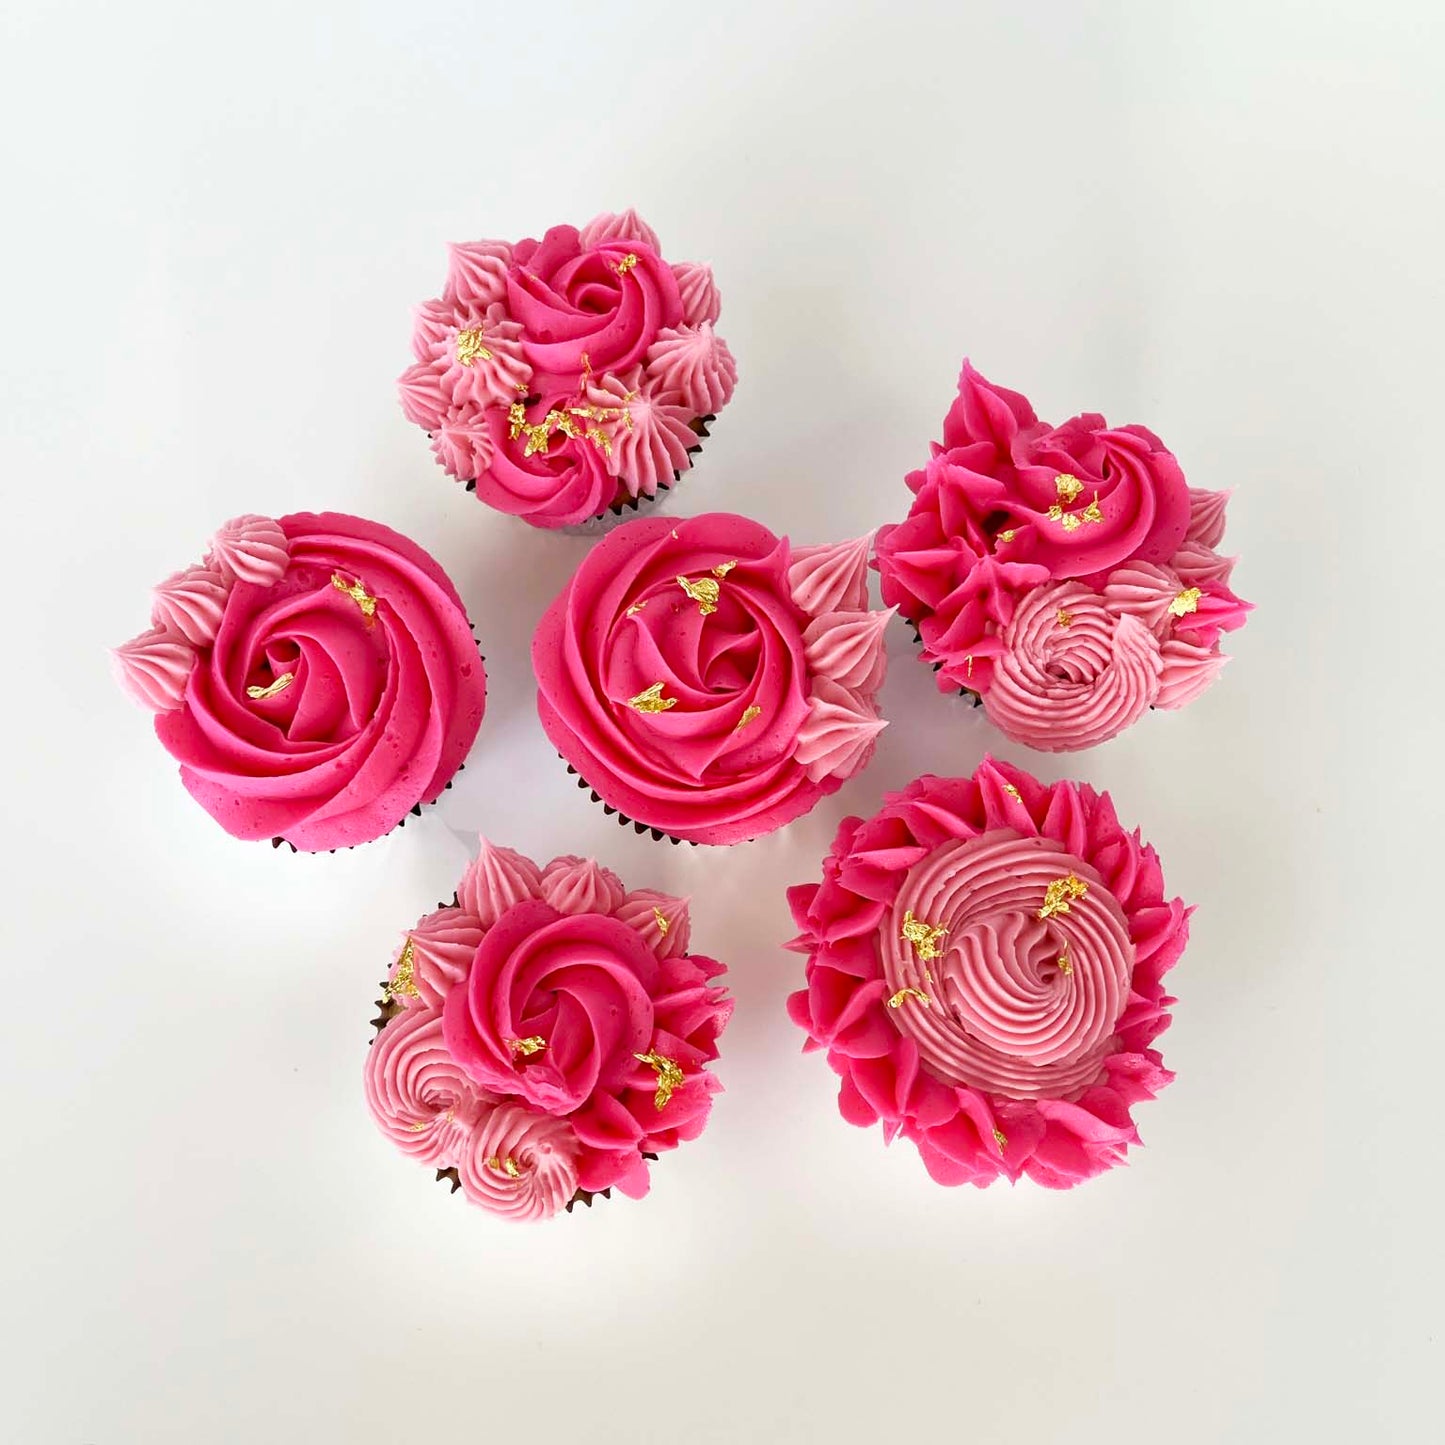 Pre-Decorated Cupcakes